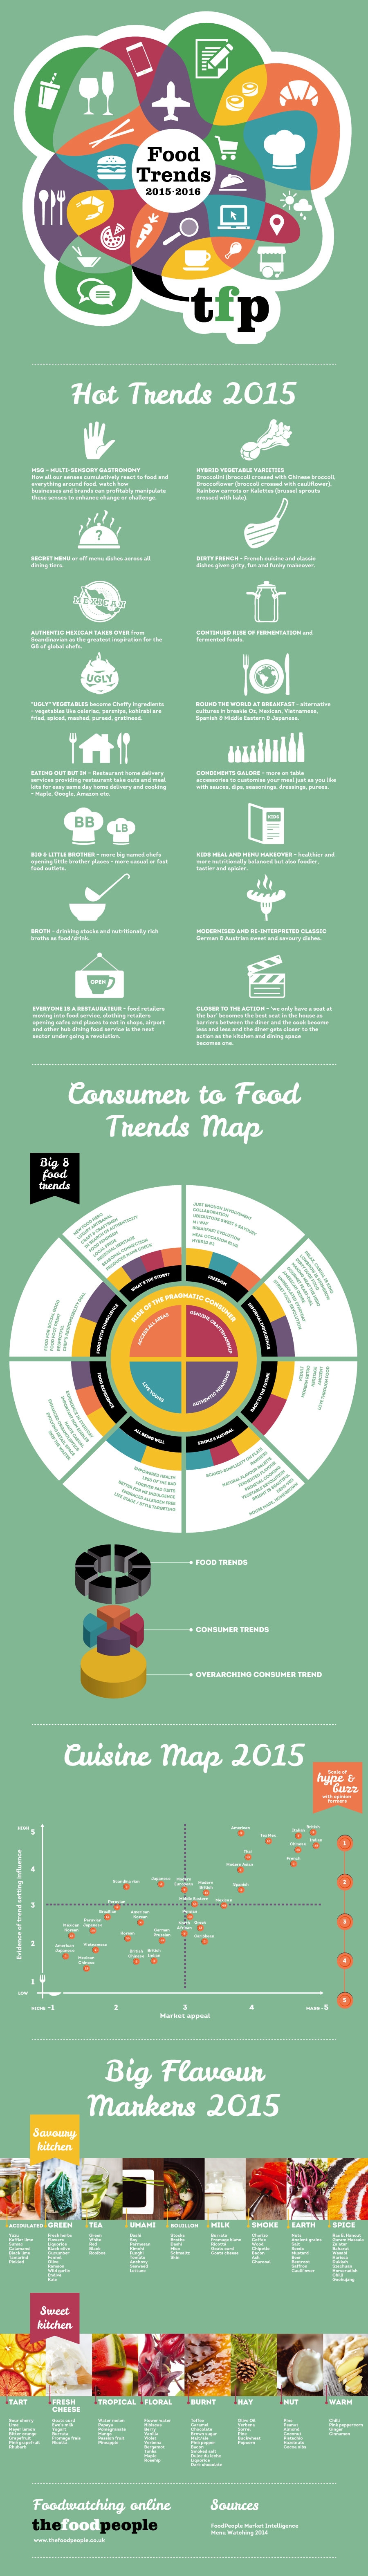 2015_food_trends_infographic.jpg